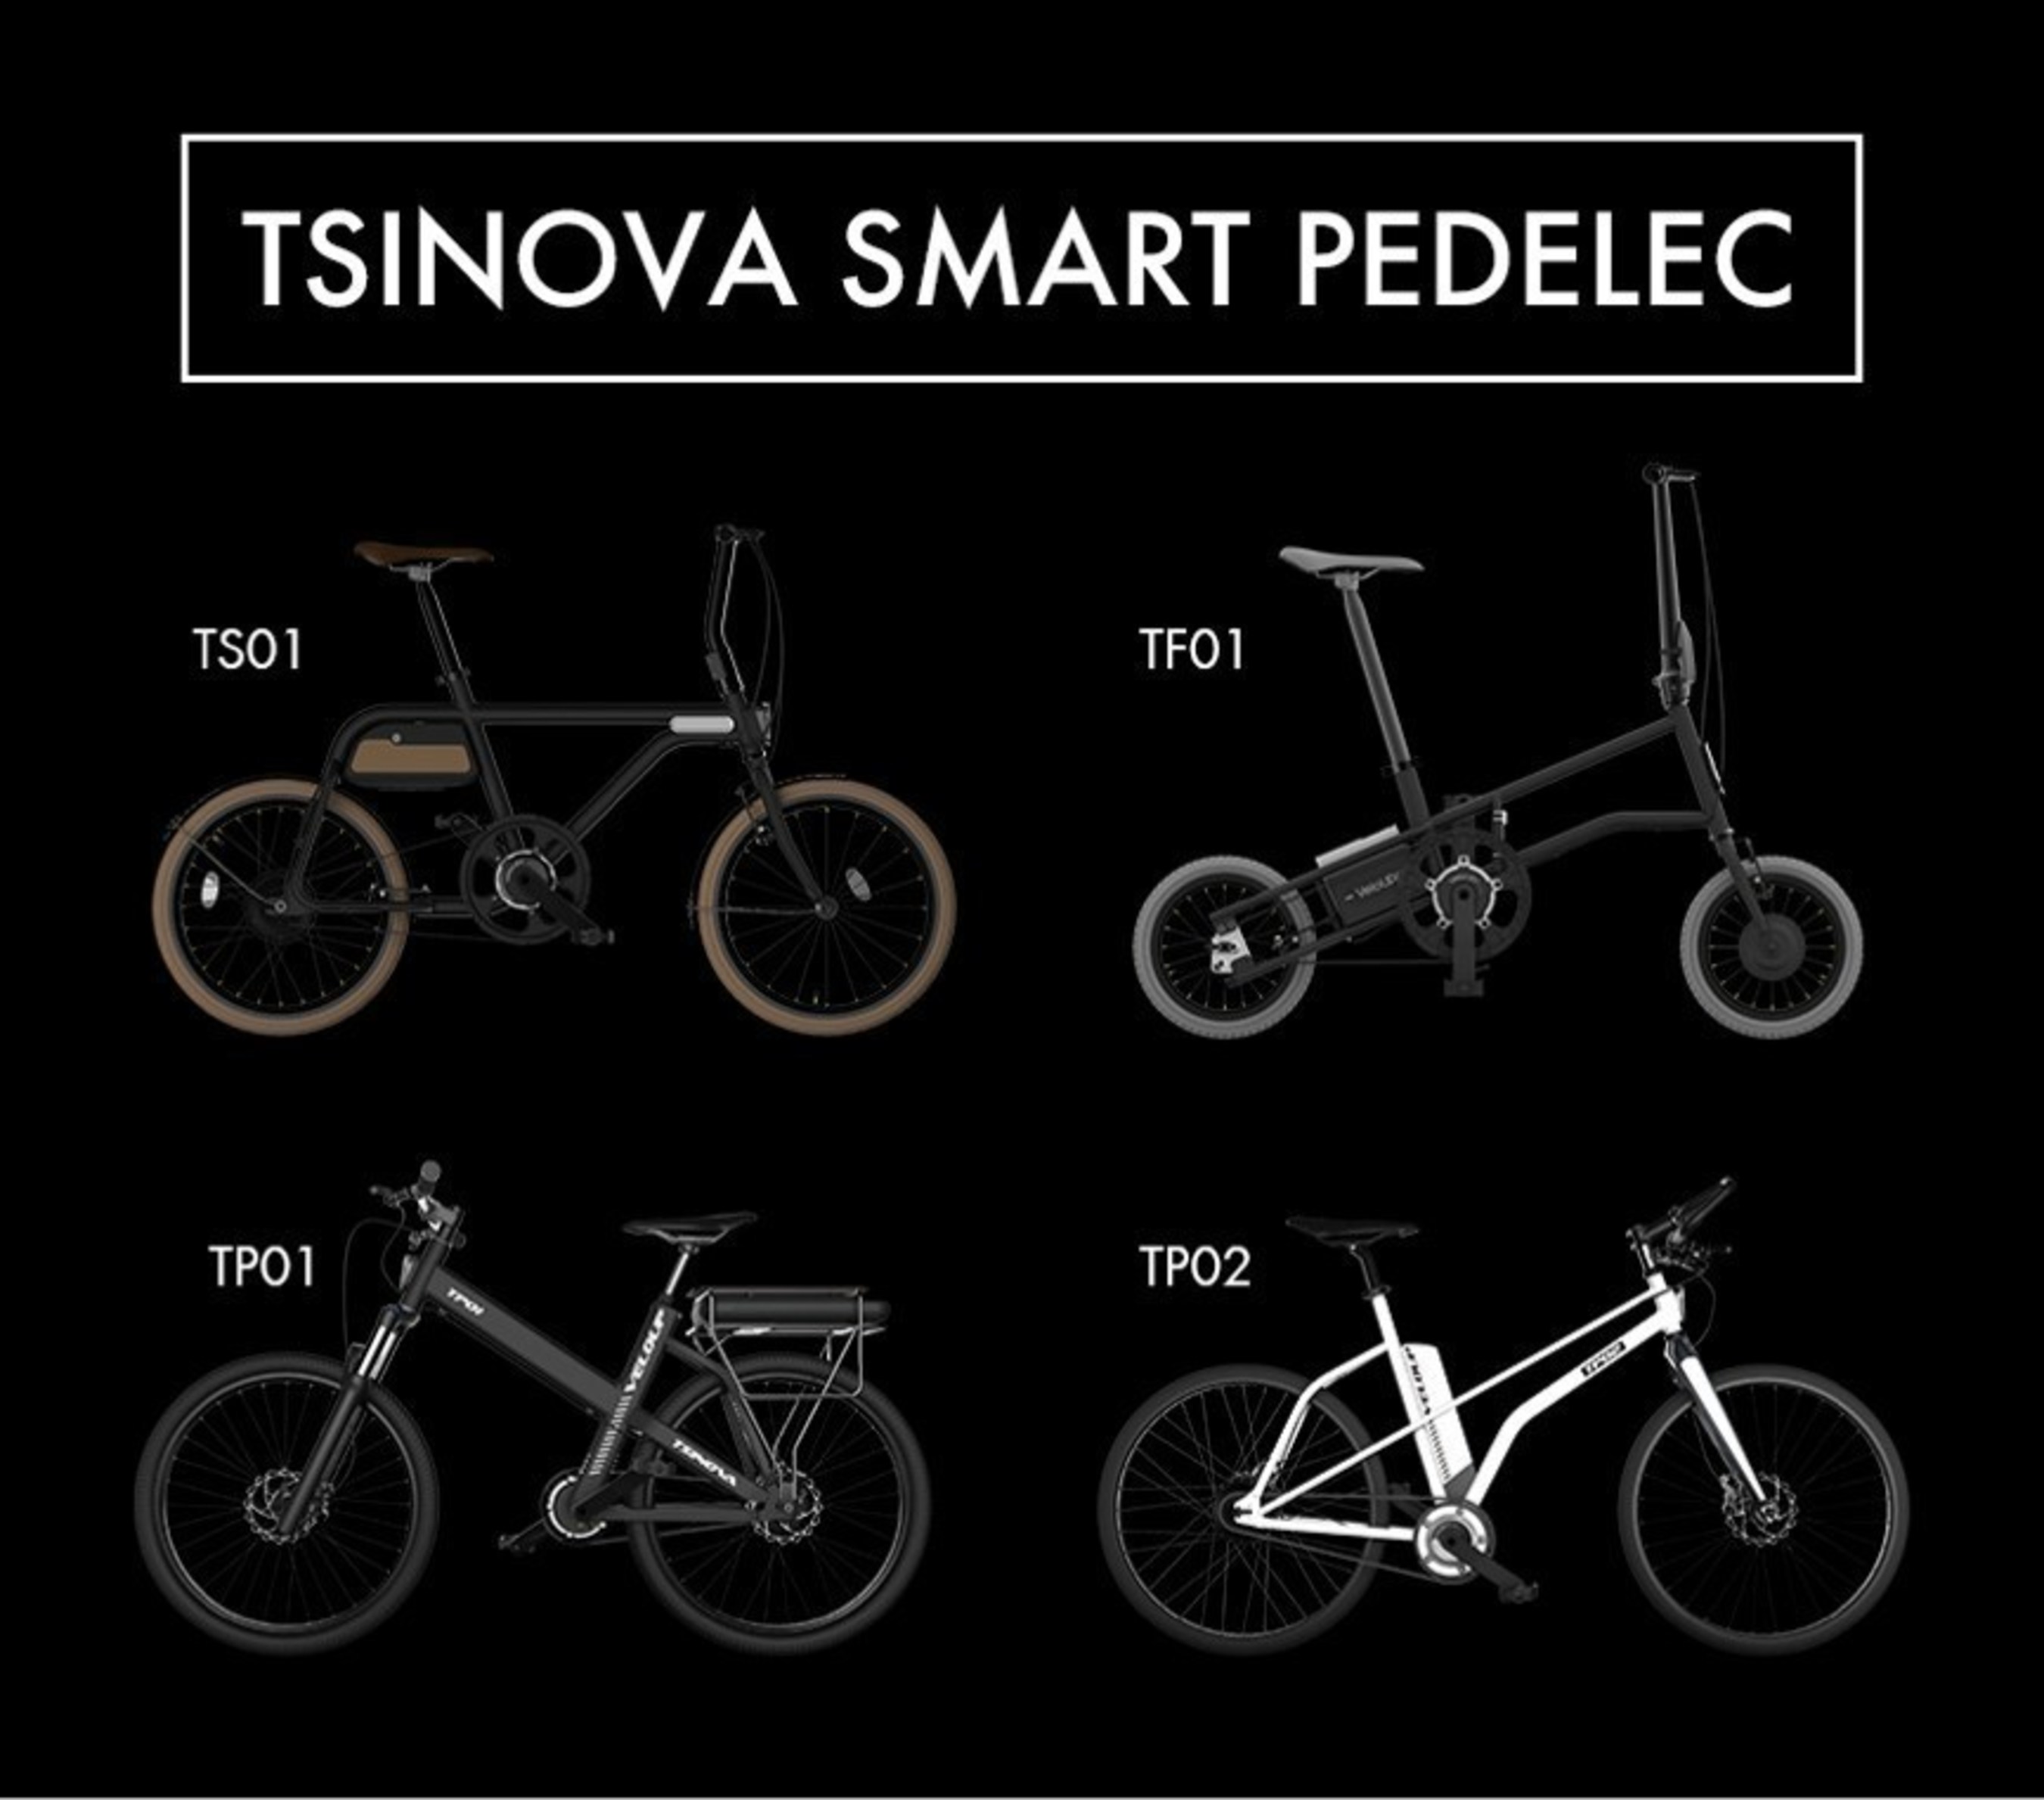 TSINOVA smart pedelec: combing good design with high technology